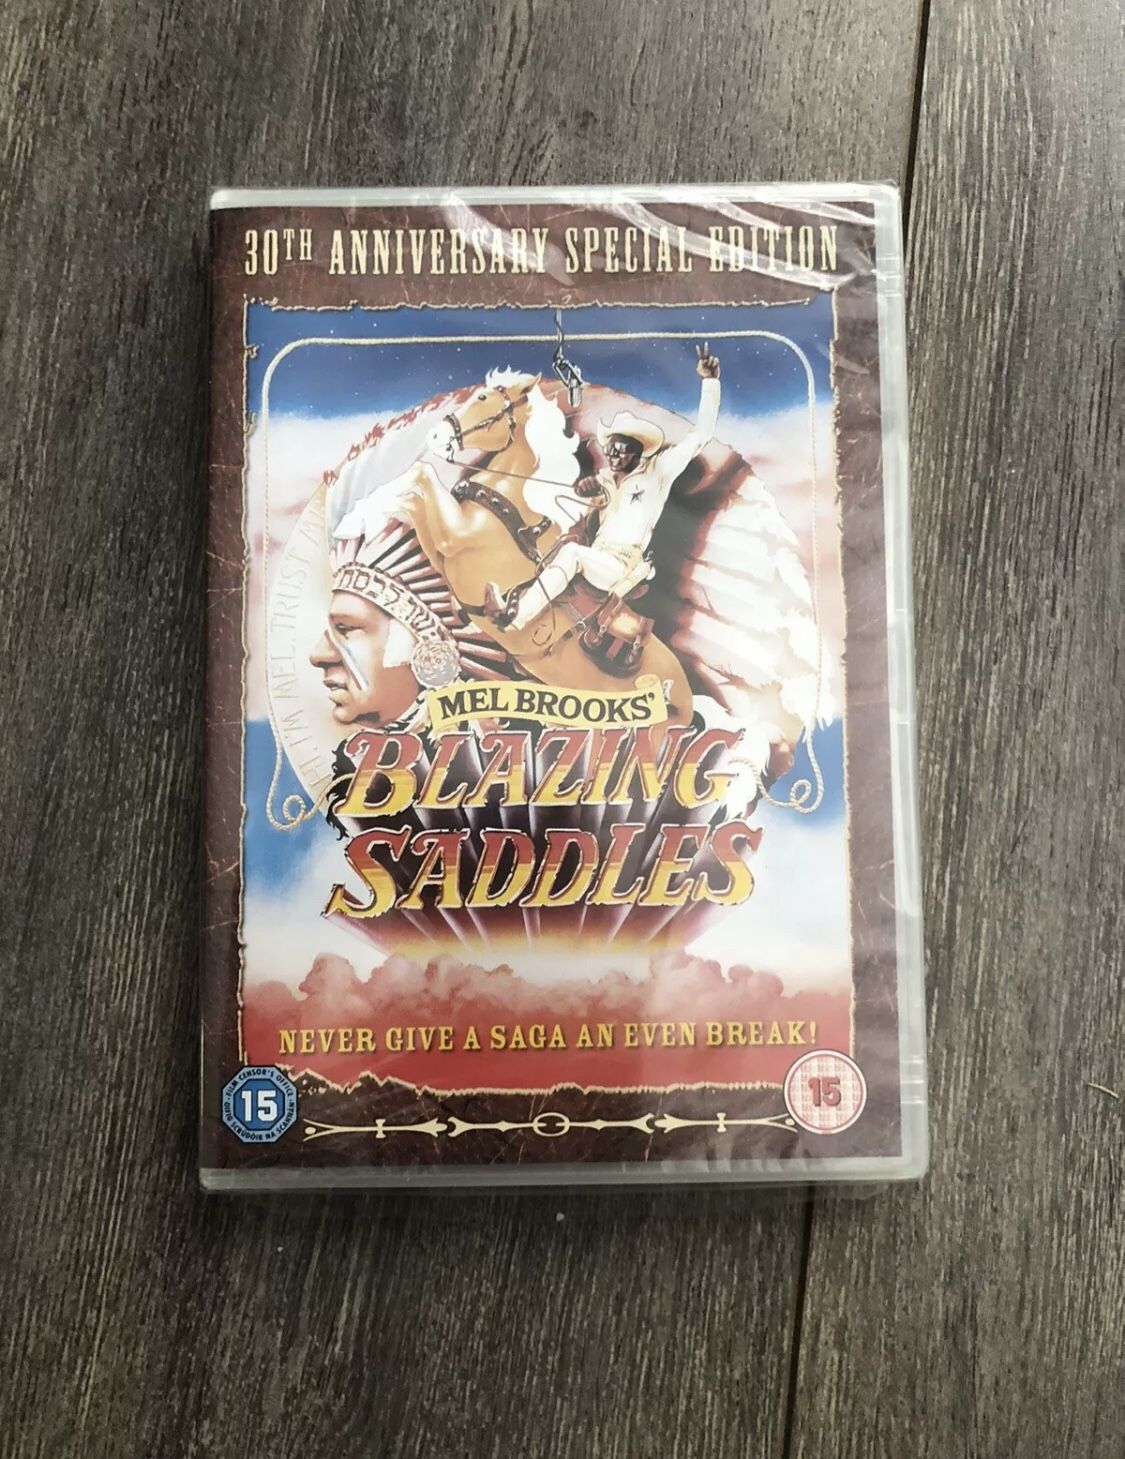 Blazing saddles DVD special edition